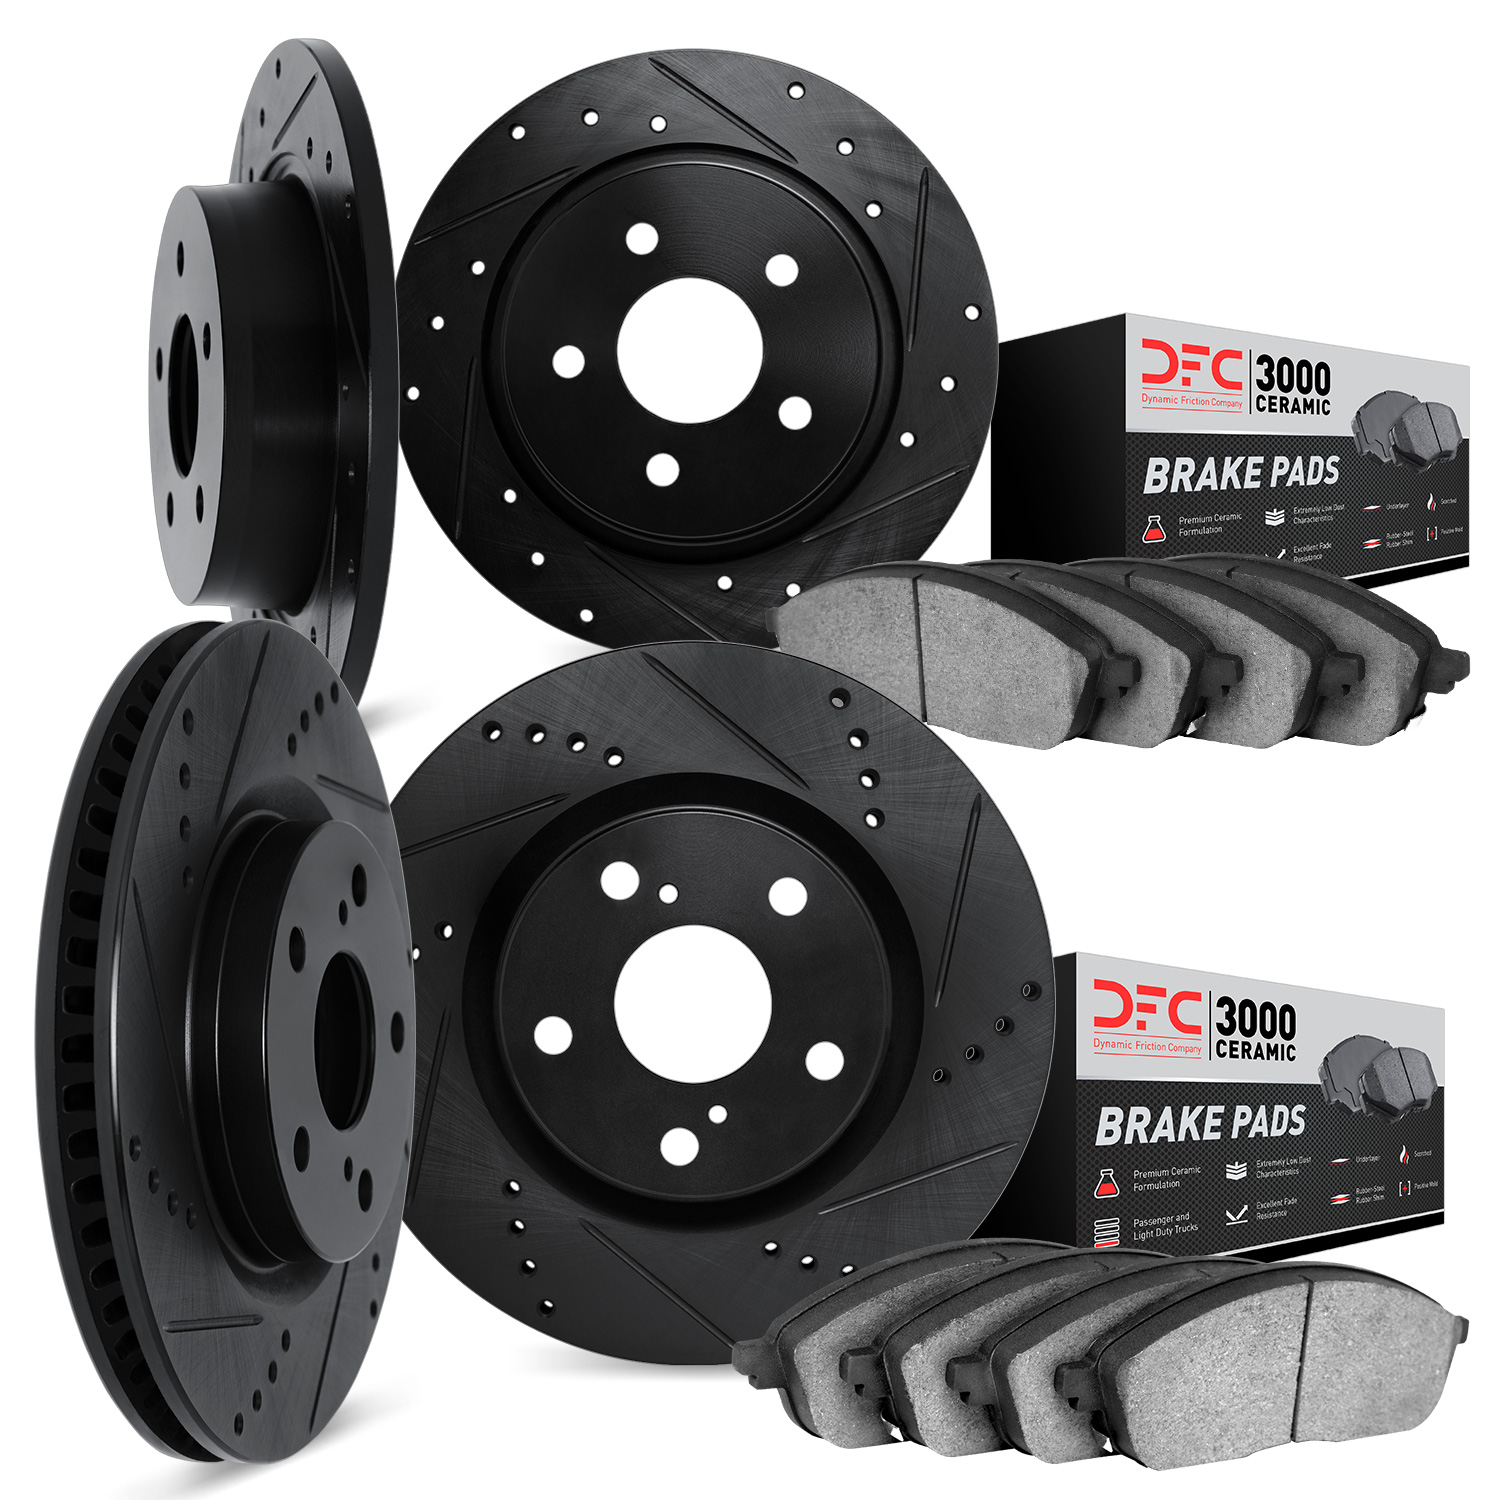 8304-80042 Drilled/Slotted Brake Rotors with 3000-Series Ceramic Brake Pads Kit [Black], 2014-2016 Ford/Lincoln/Mercury/Mazda, P